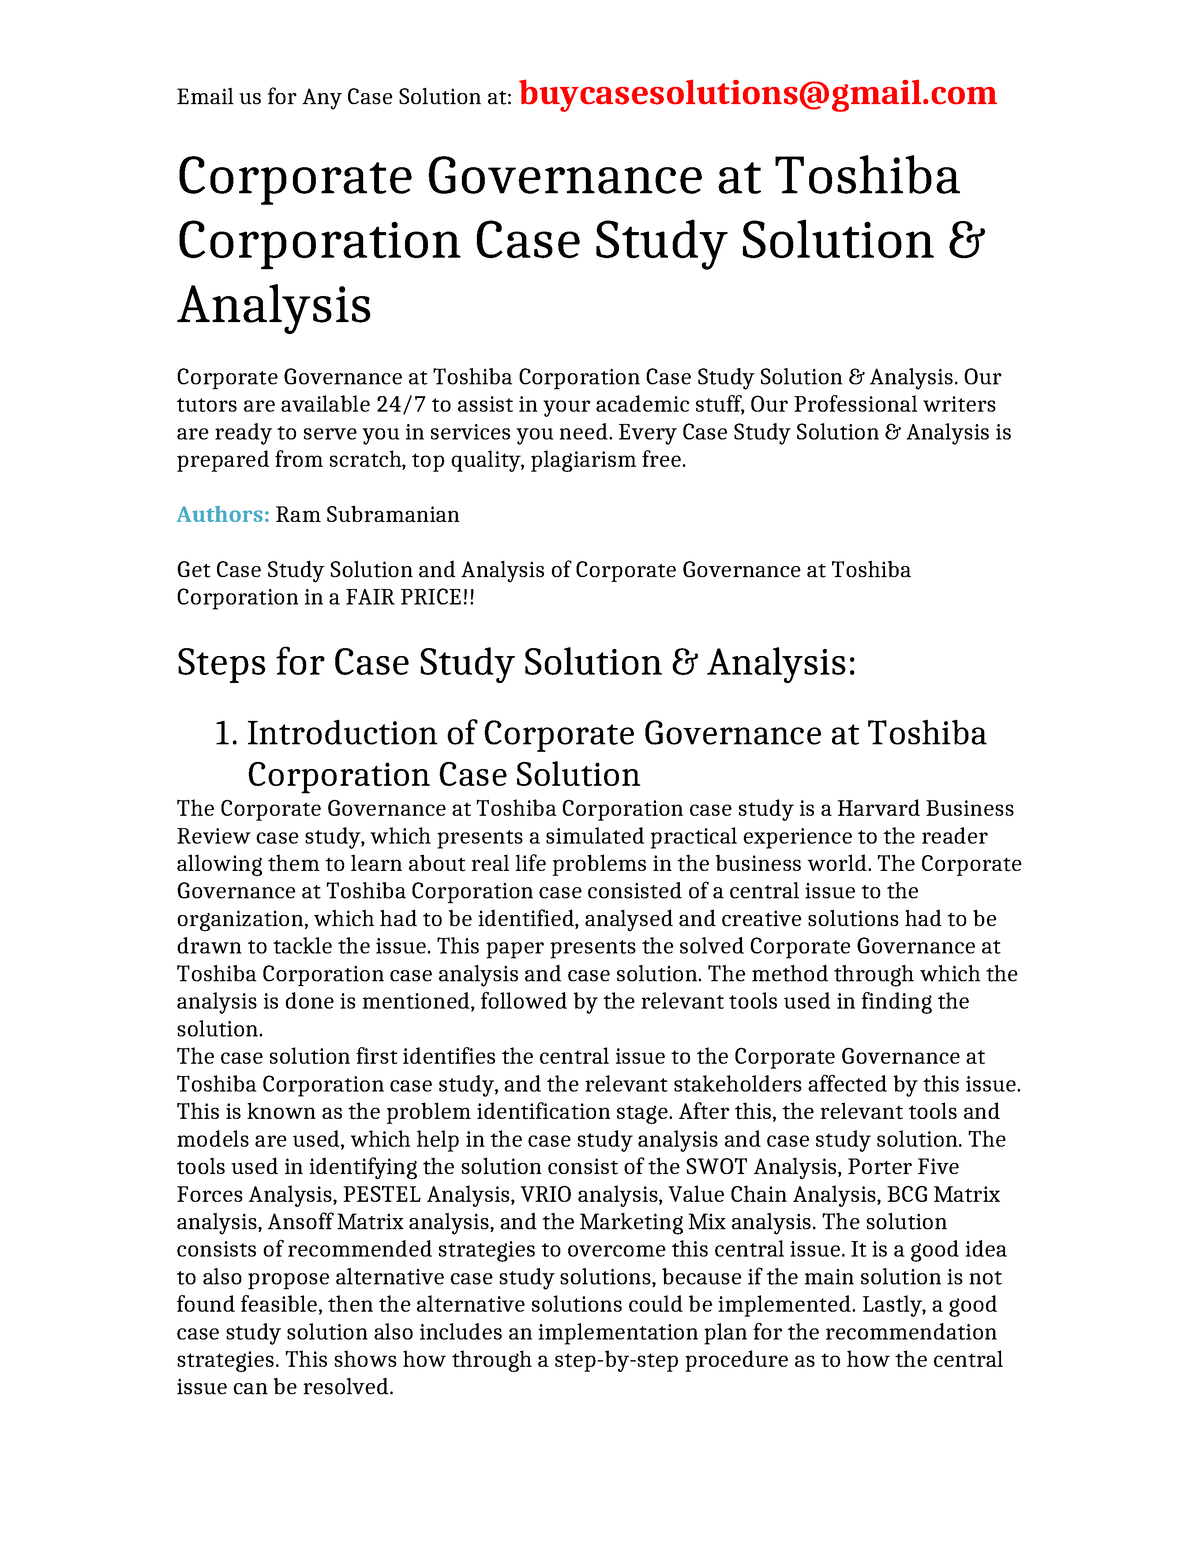 corporate governance at toshiba corporation case study